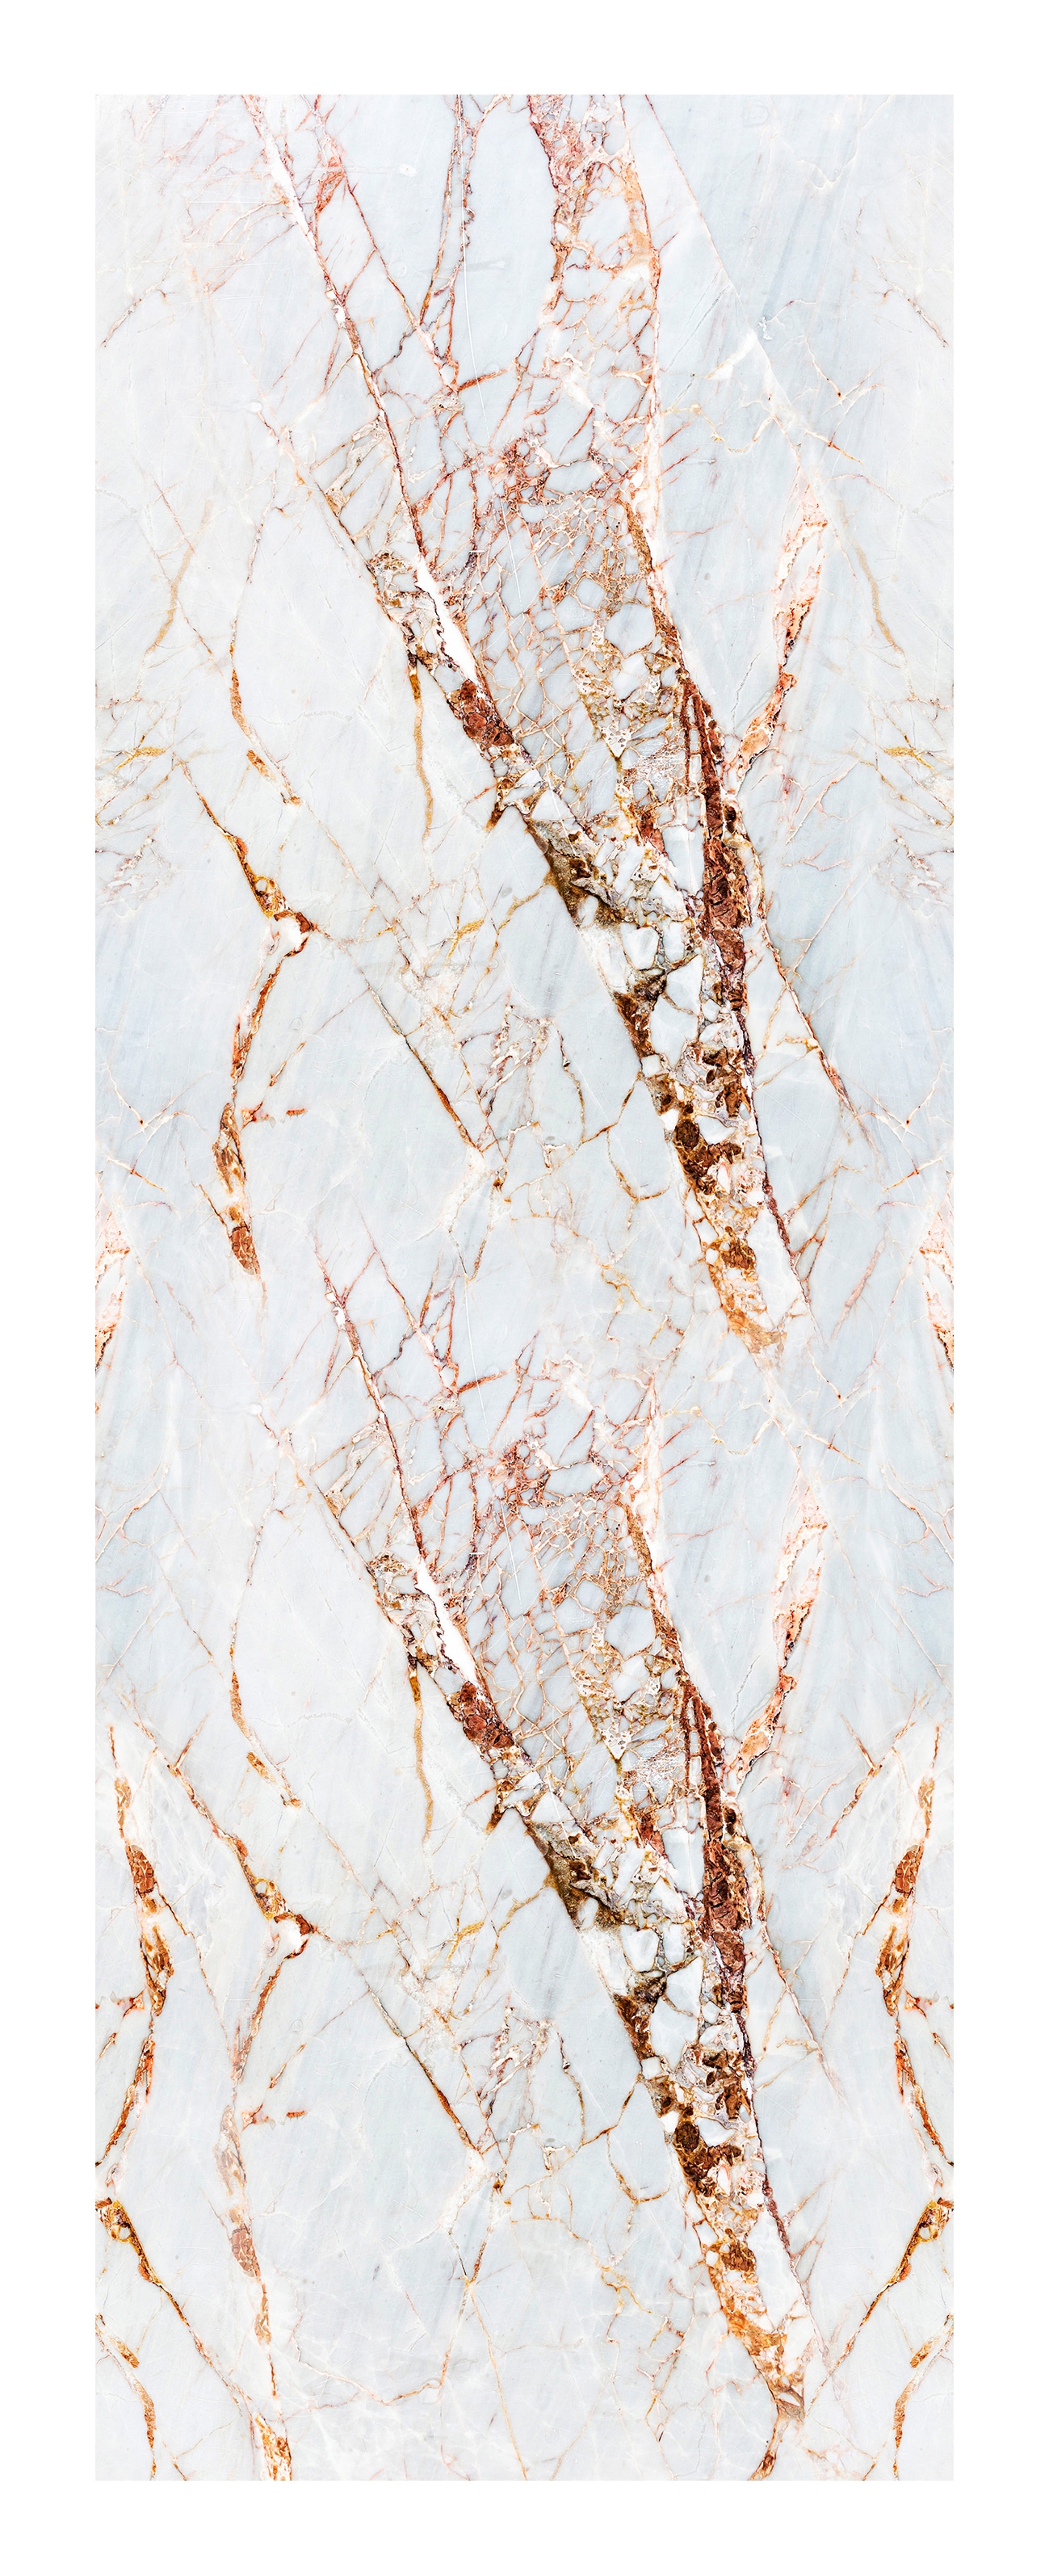 queence Vinyltapete »Marmor-Weiss«, Steinoptik, 90 x 250 cm, selbstklebend